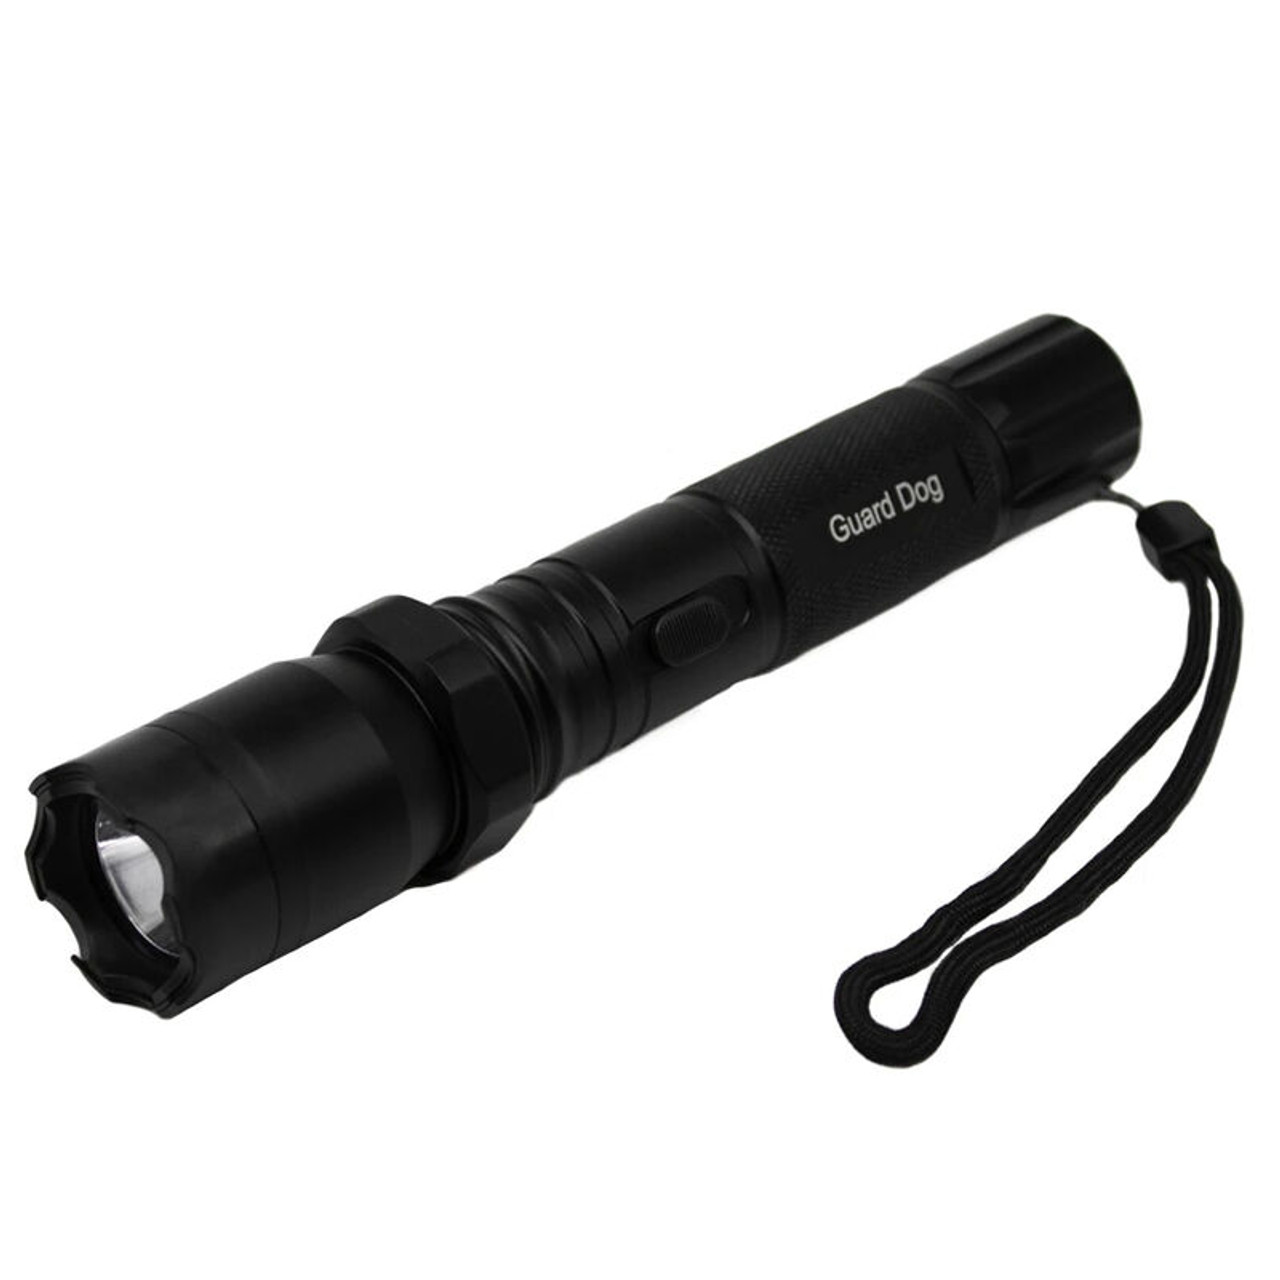 Guard Dog Security DIABLO II - Stun Gun Flashlight 320 Lumens with Rechargeable Battery